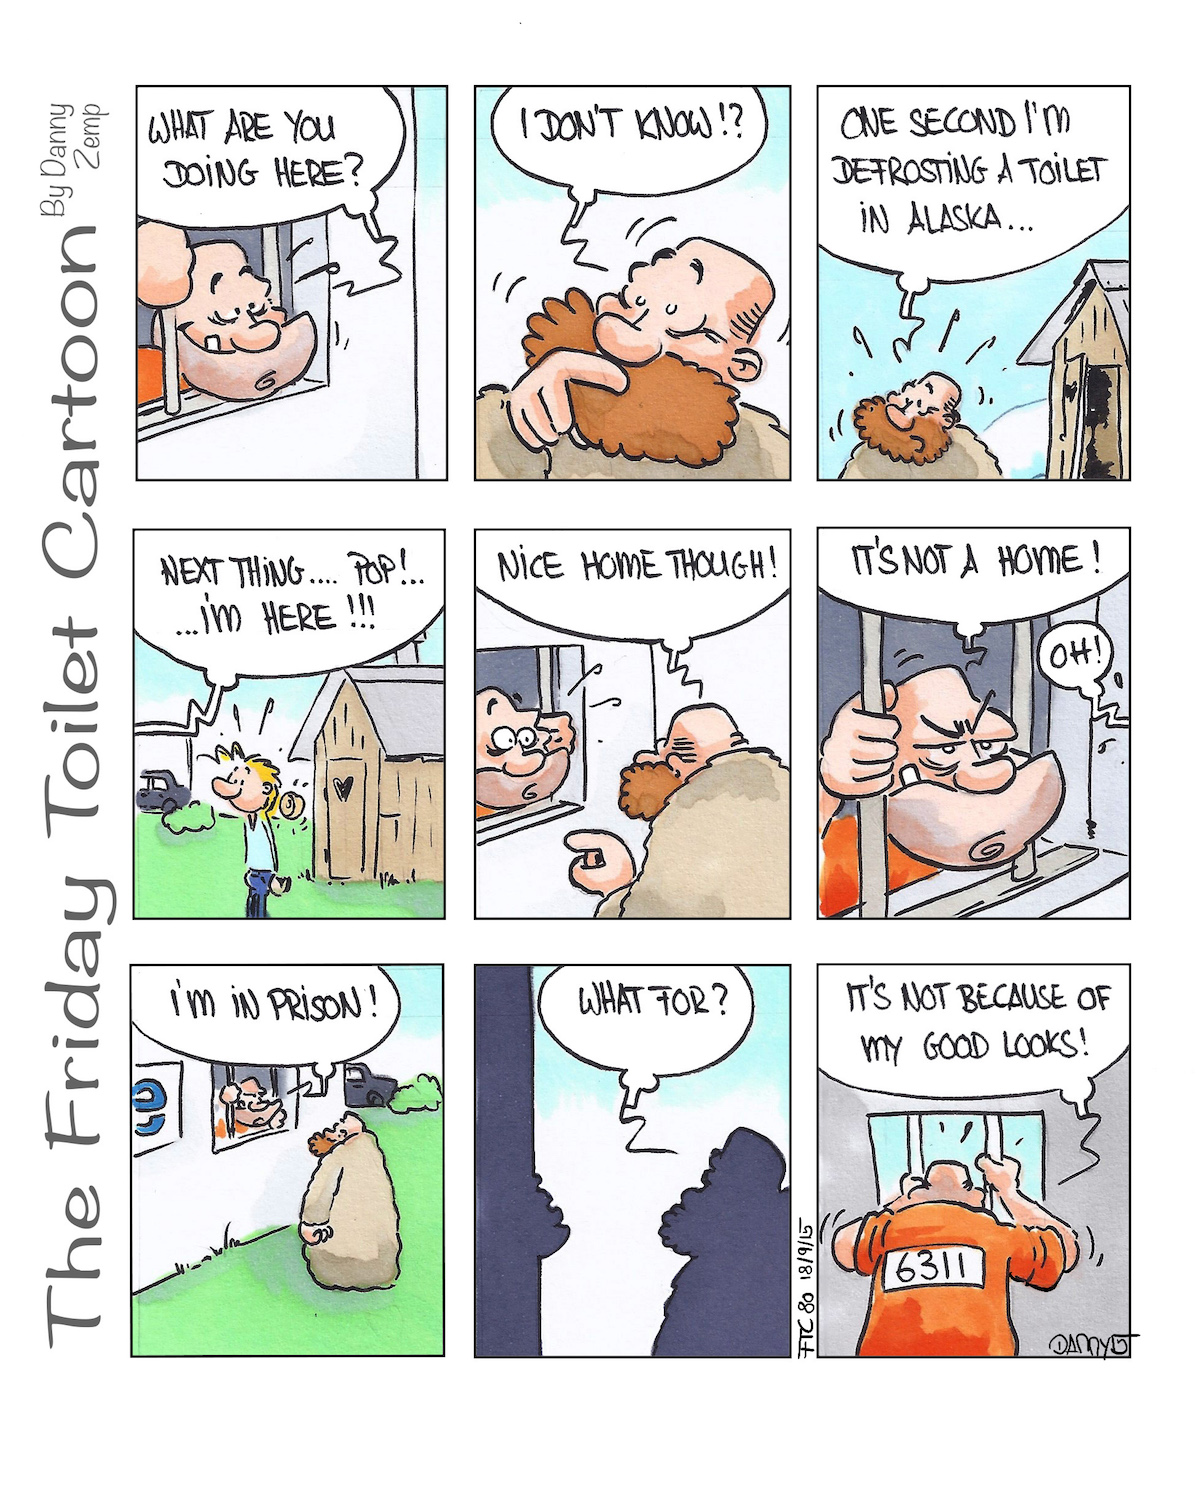 Danny Zemp The Friday Toilet Cartoons, page 77 to 80 - Danny Zemp